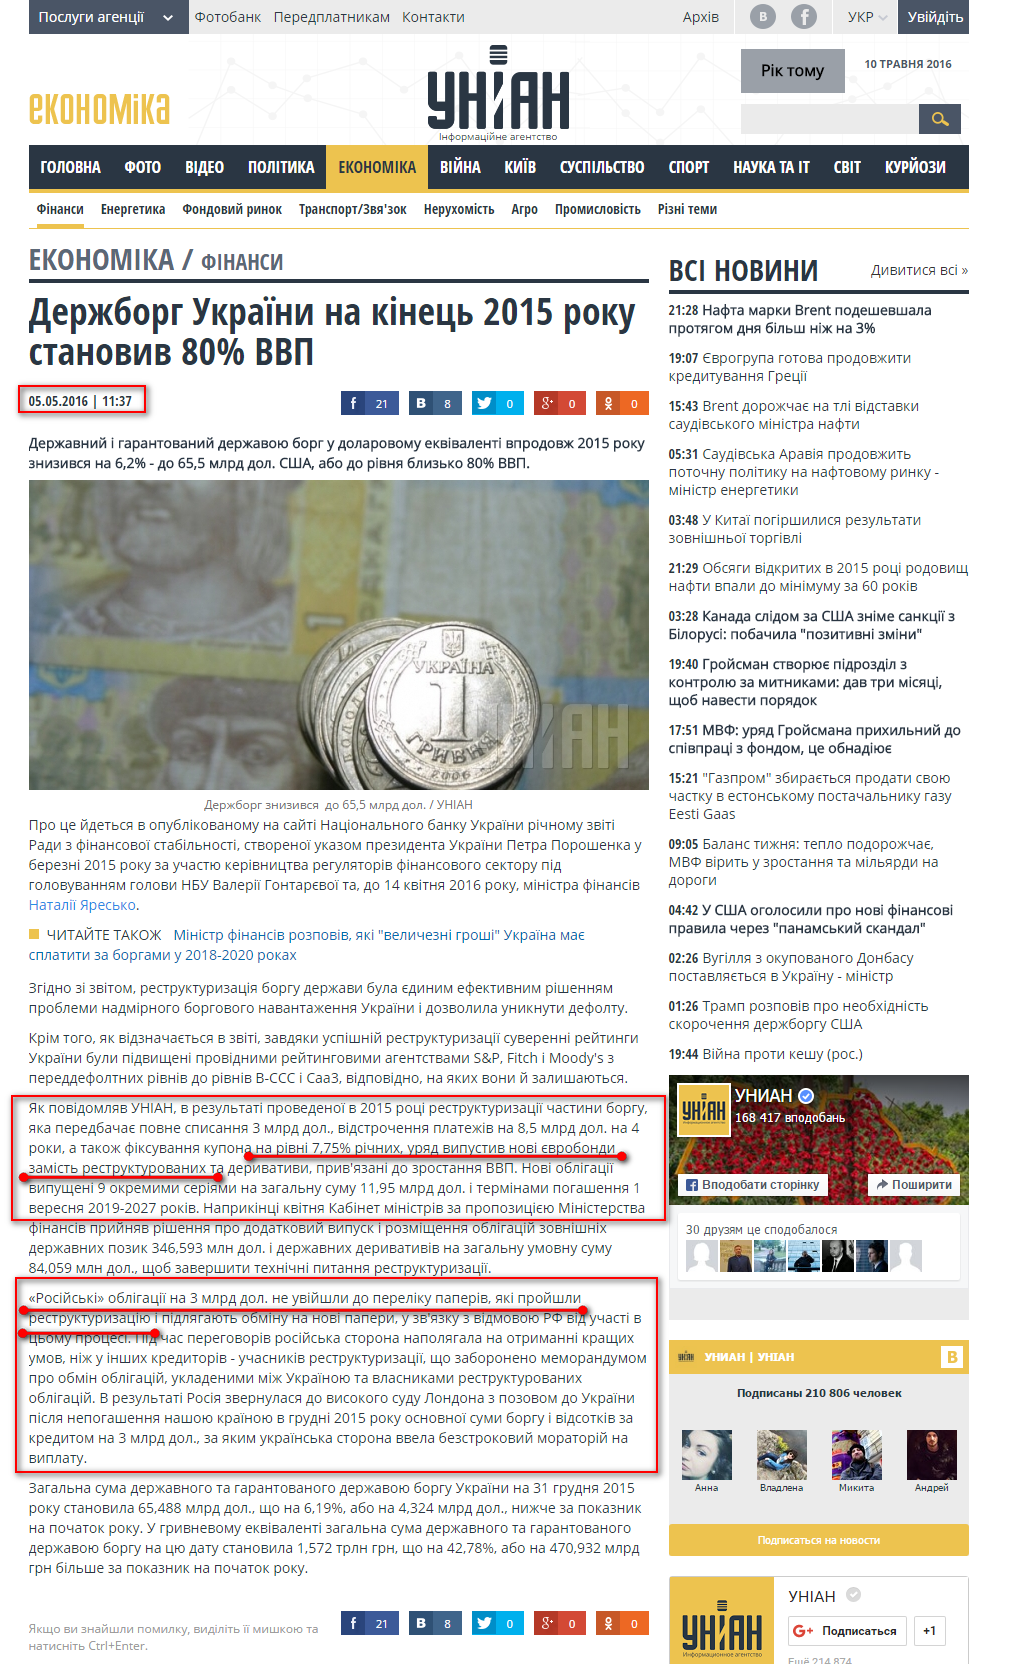 http://www.unian.ua/finance/1337680-derjborg-ukrajini-na-kinets-2015-roku-stanoviv-80-vvp.html